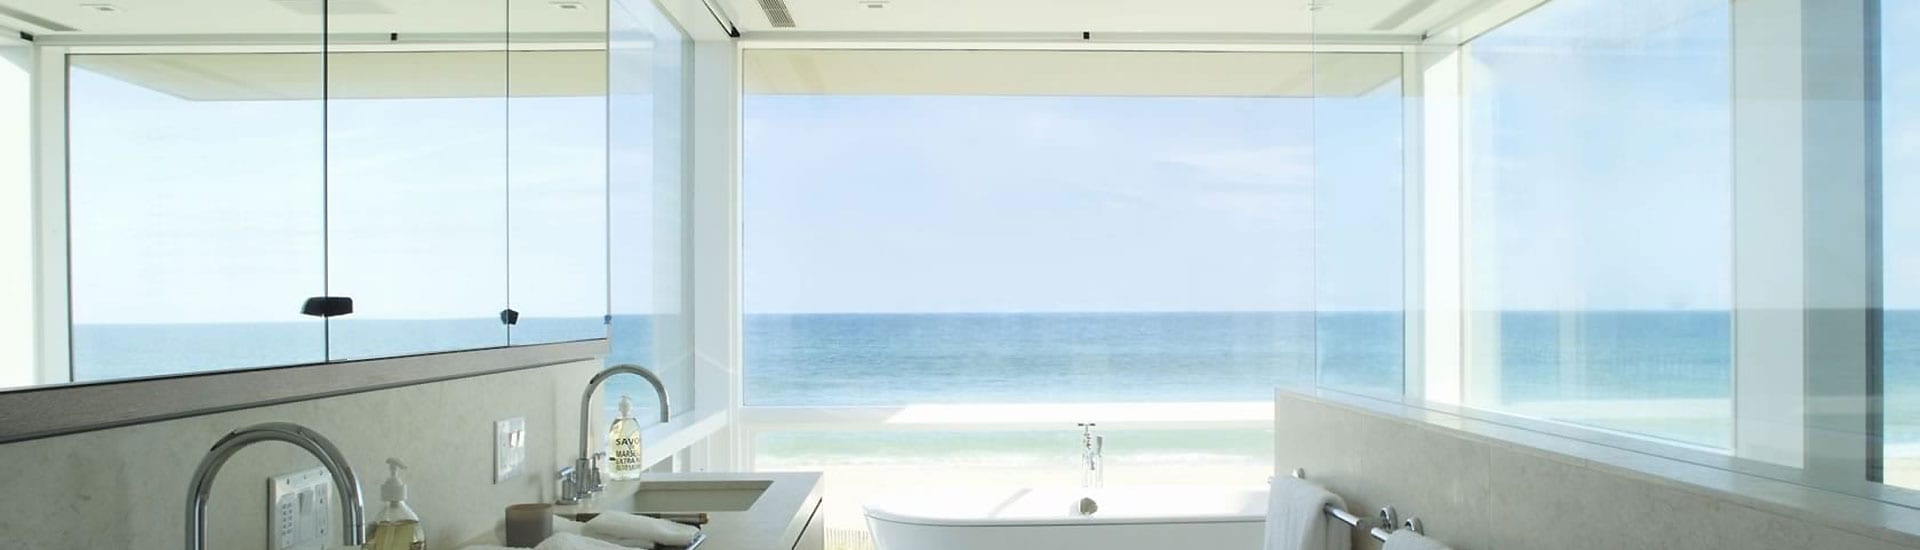 Massive glass window overlooking the sea through a bathroom